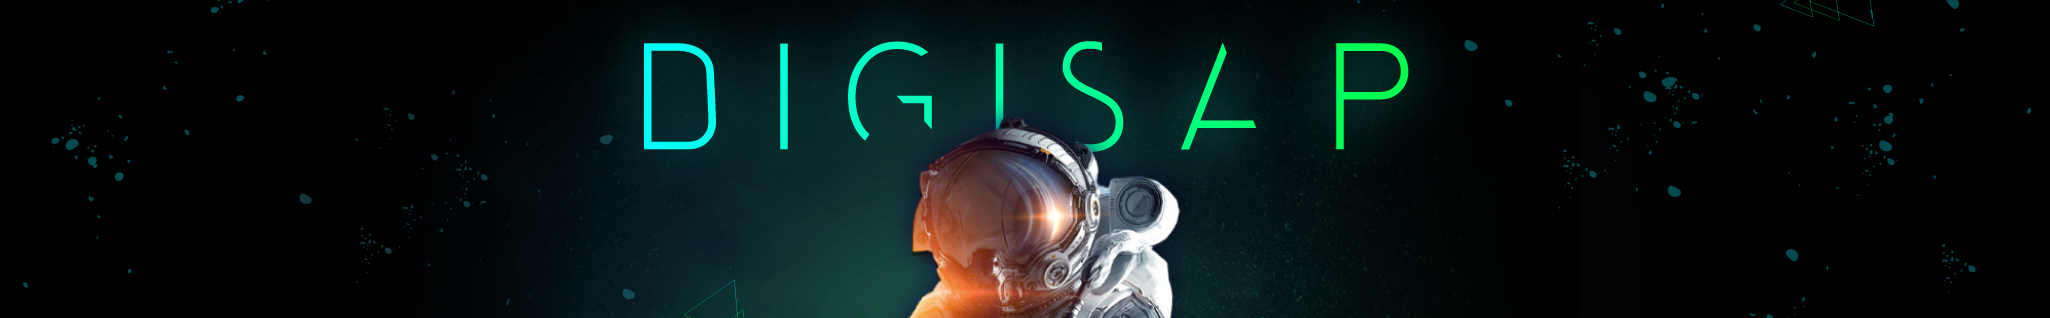 Digisap Agencia Marketing Digital's profile banner